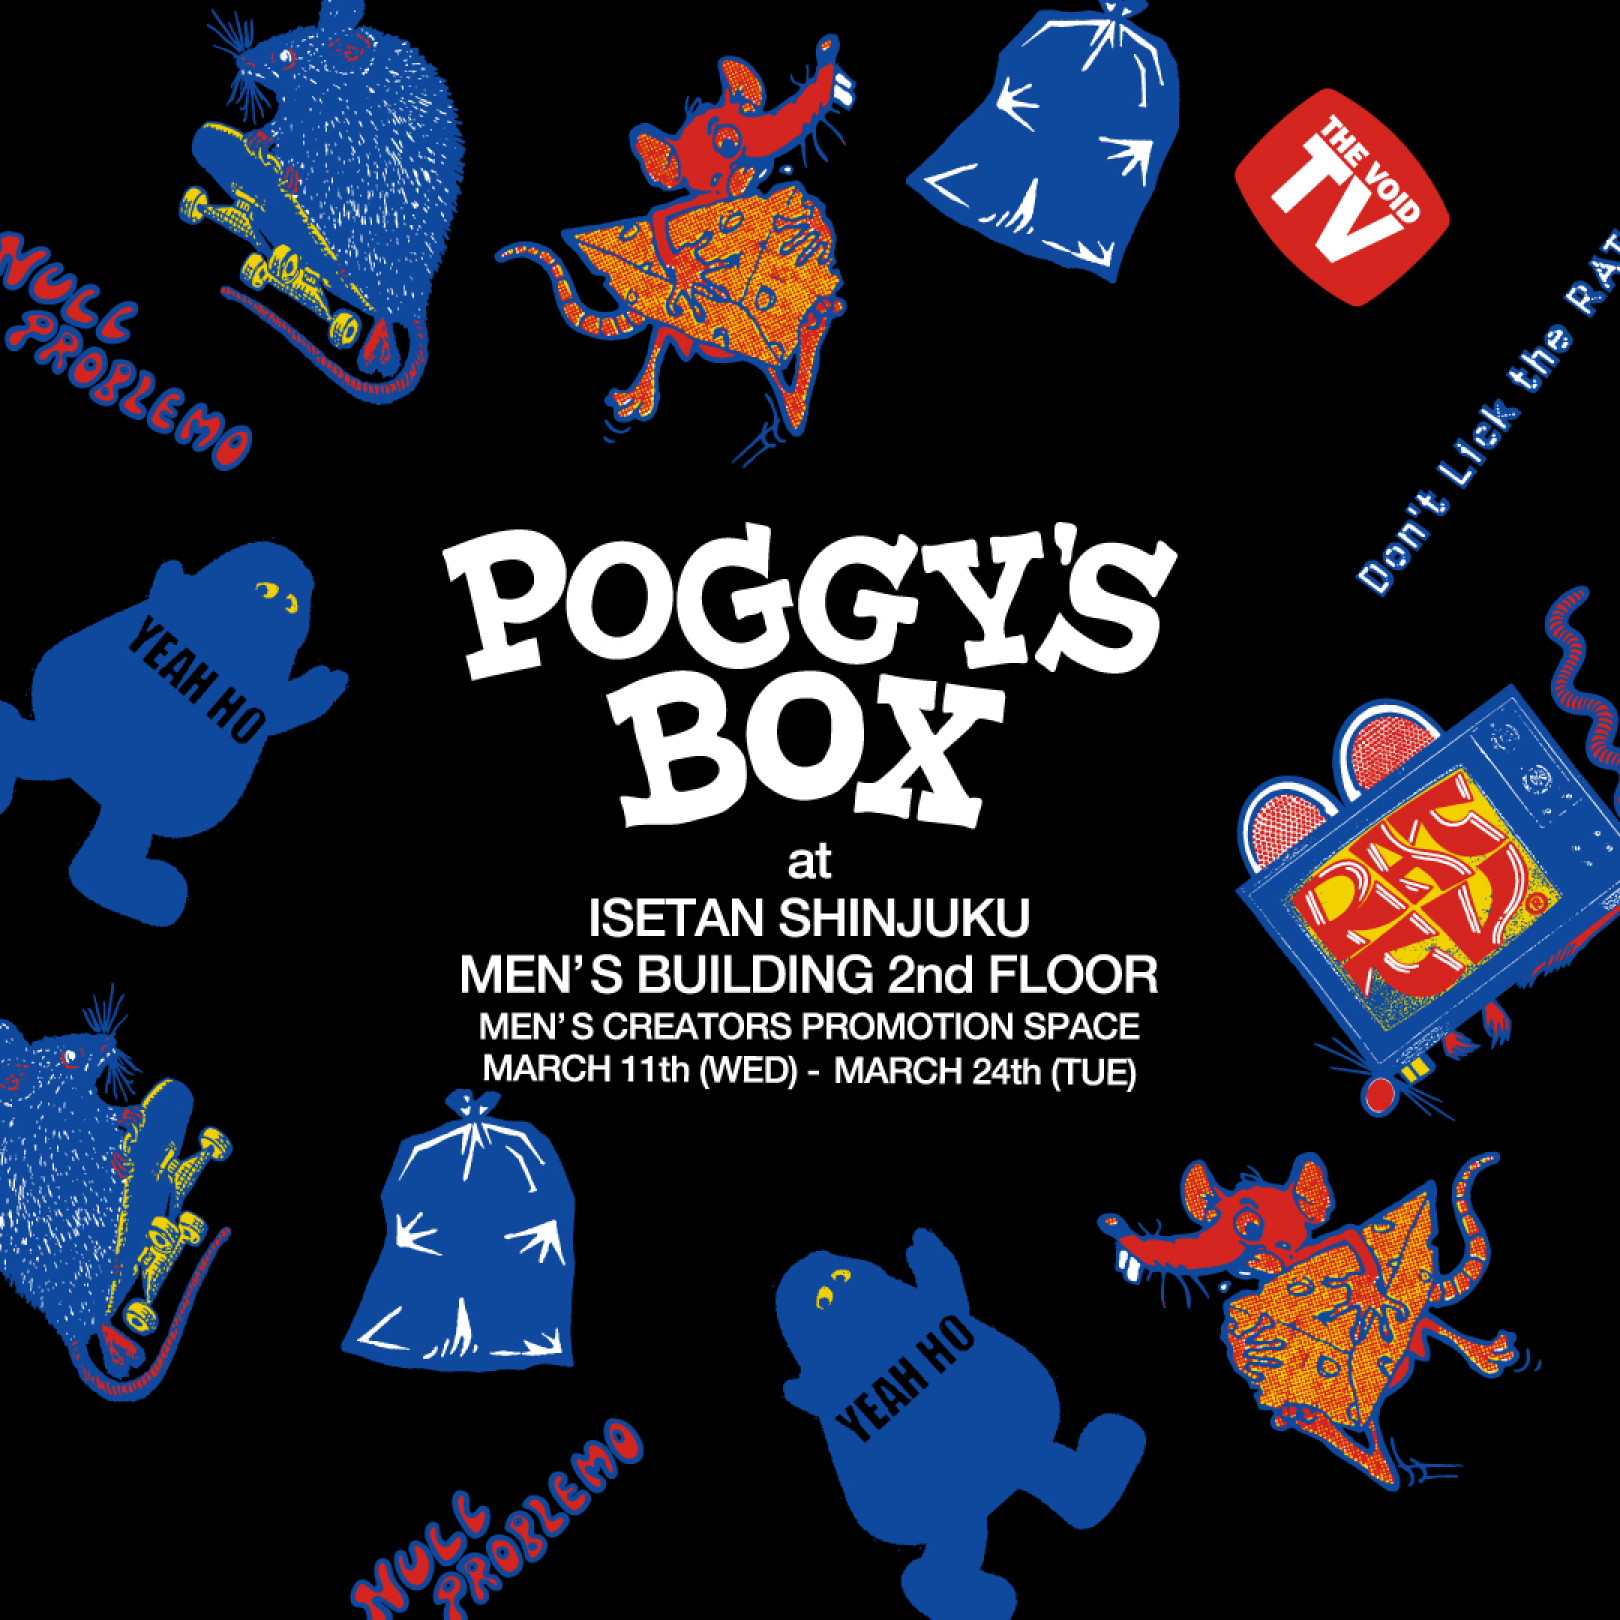 「POGGY’S BOX at ISETAN SHINJUKU」